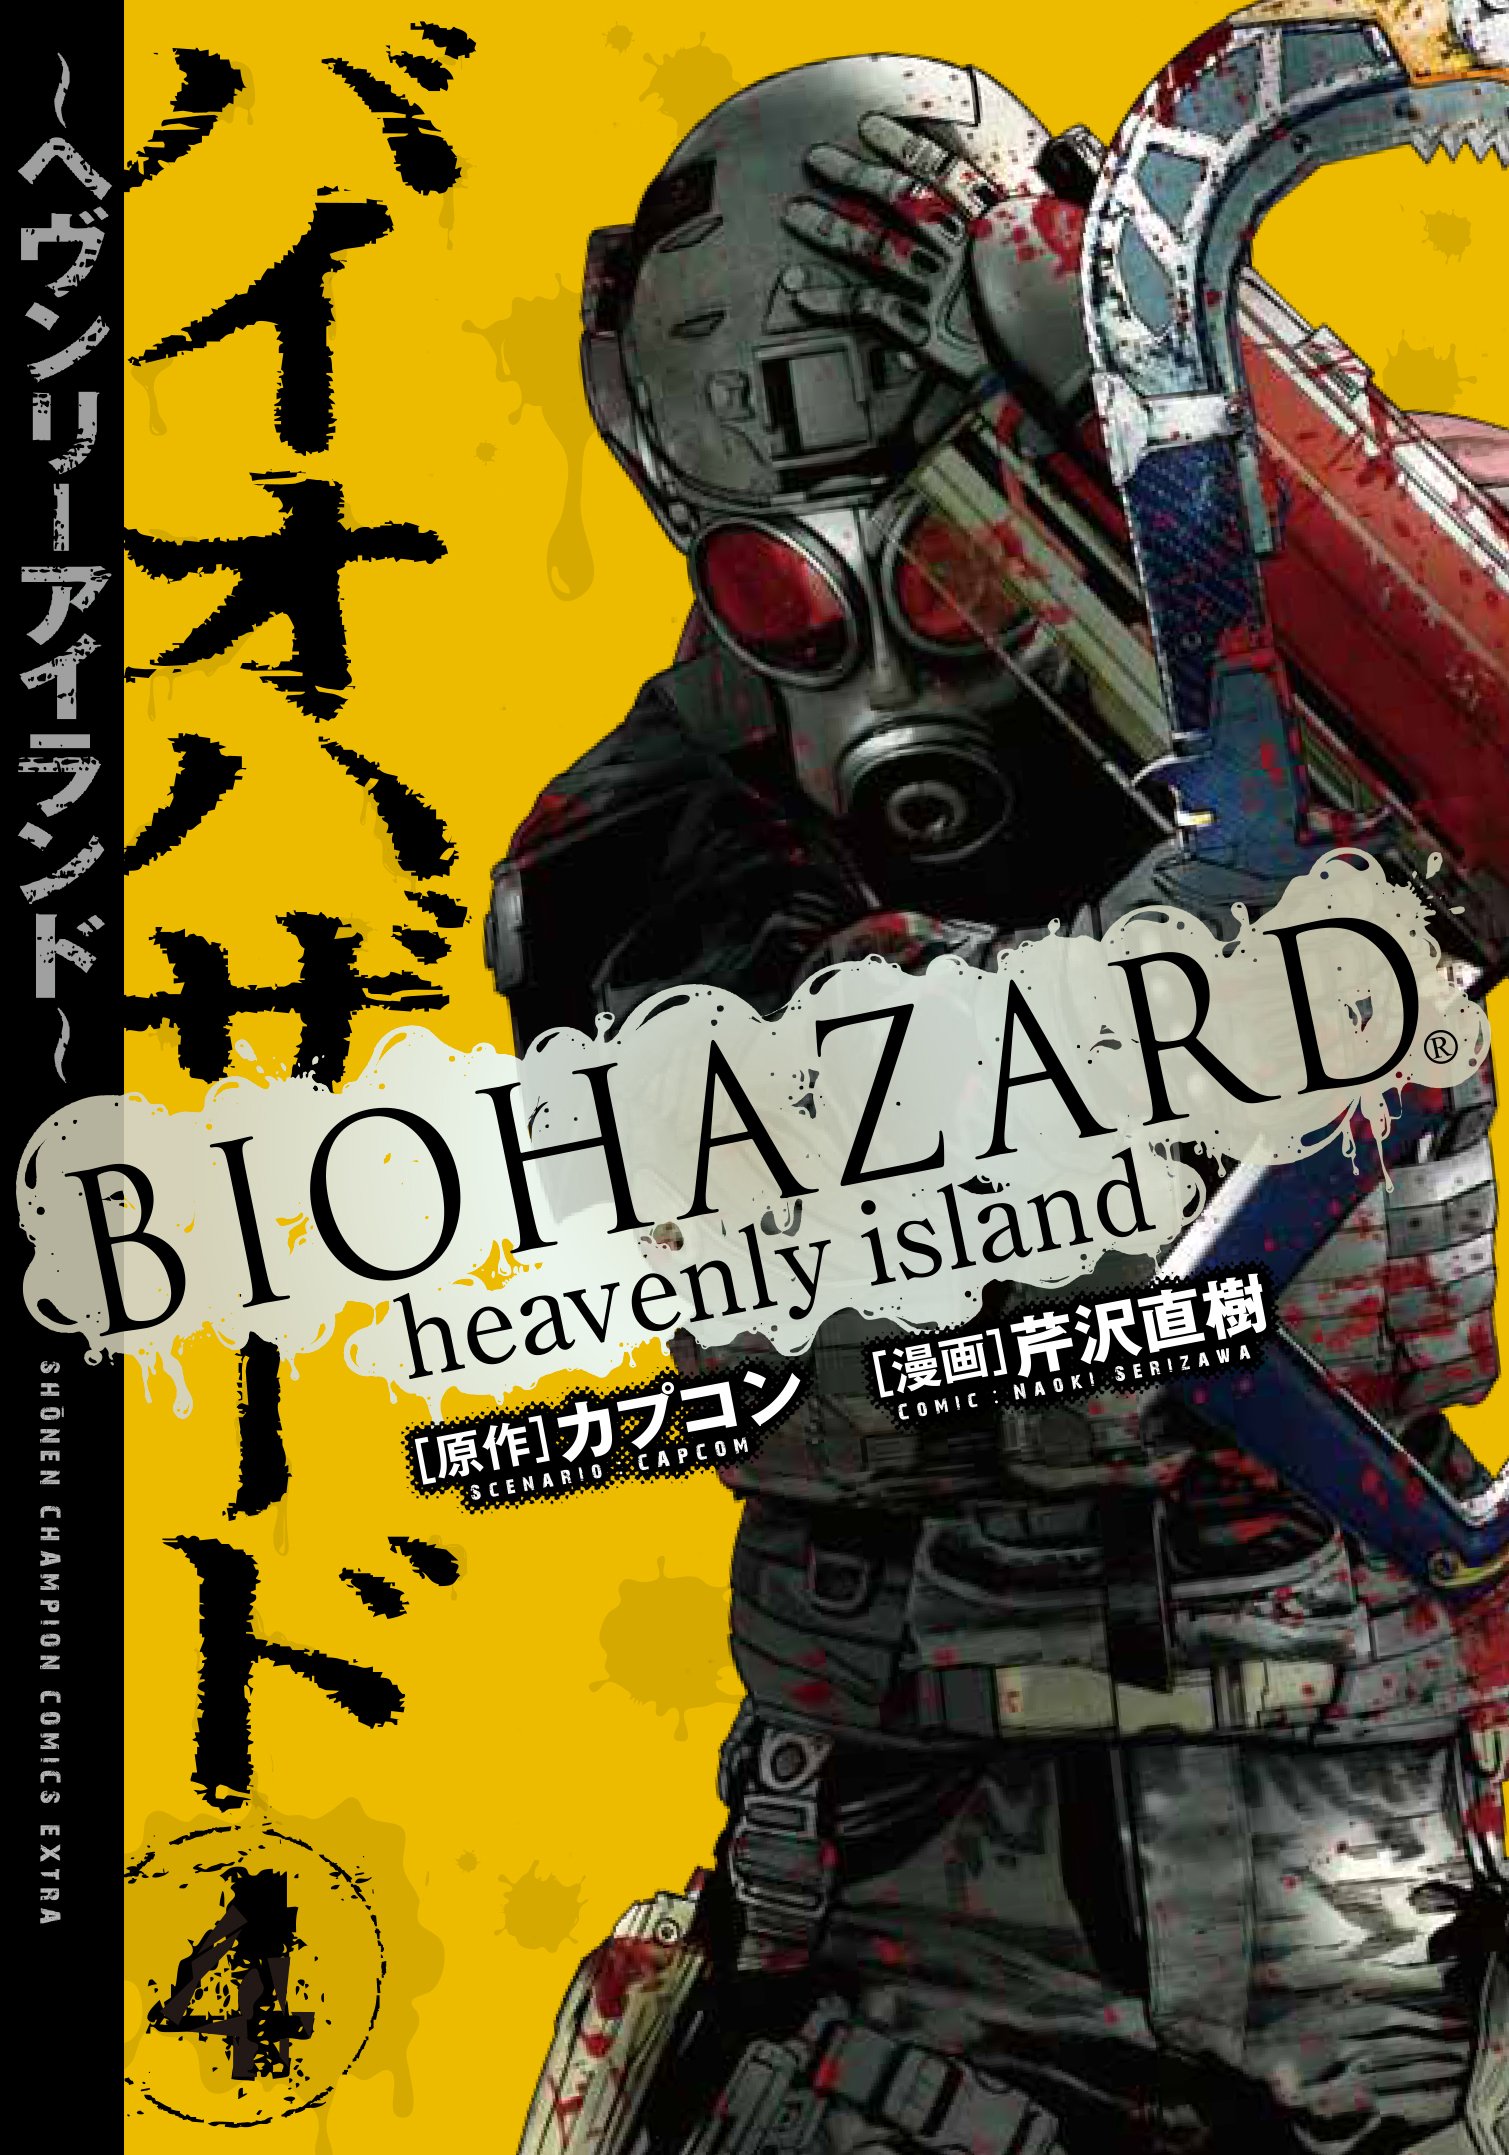 Biohazard Heavenly Island 4 Resident Evil Wiki Fandom